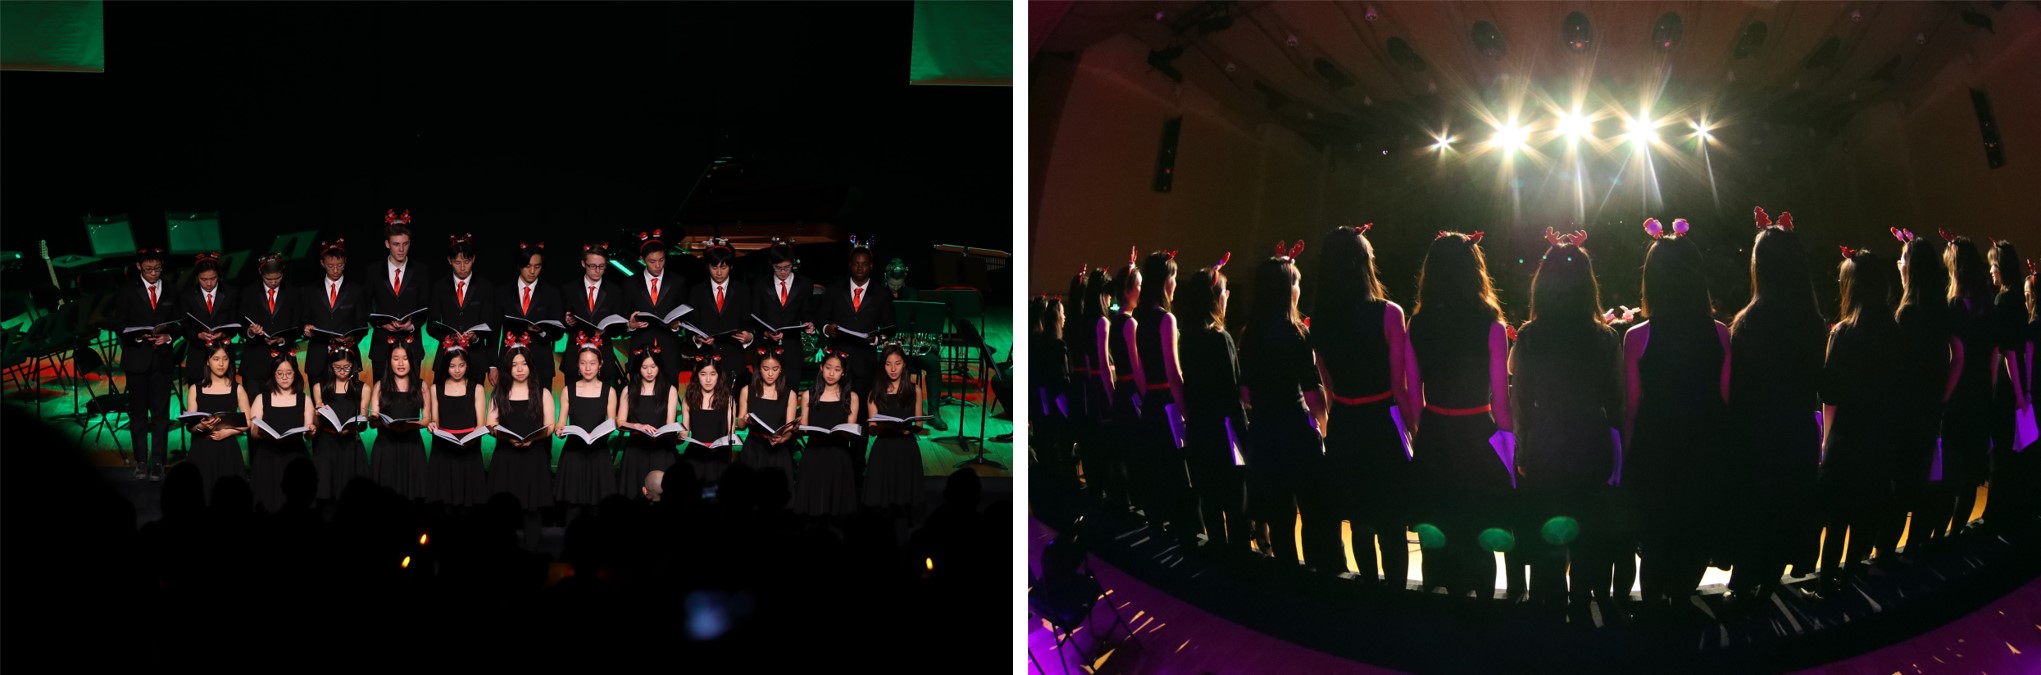 Dulwich Beijing Christmas Concert 2019 - Senior School